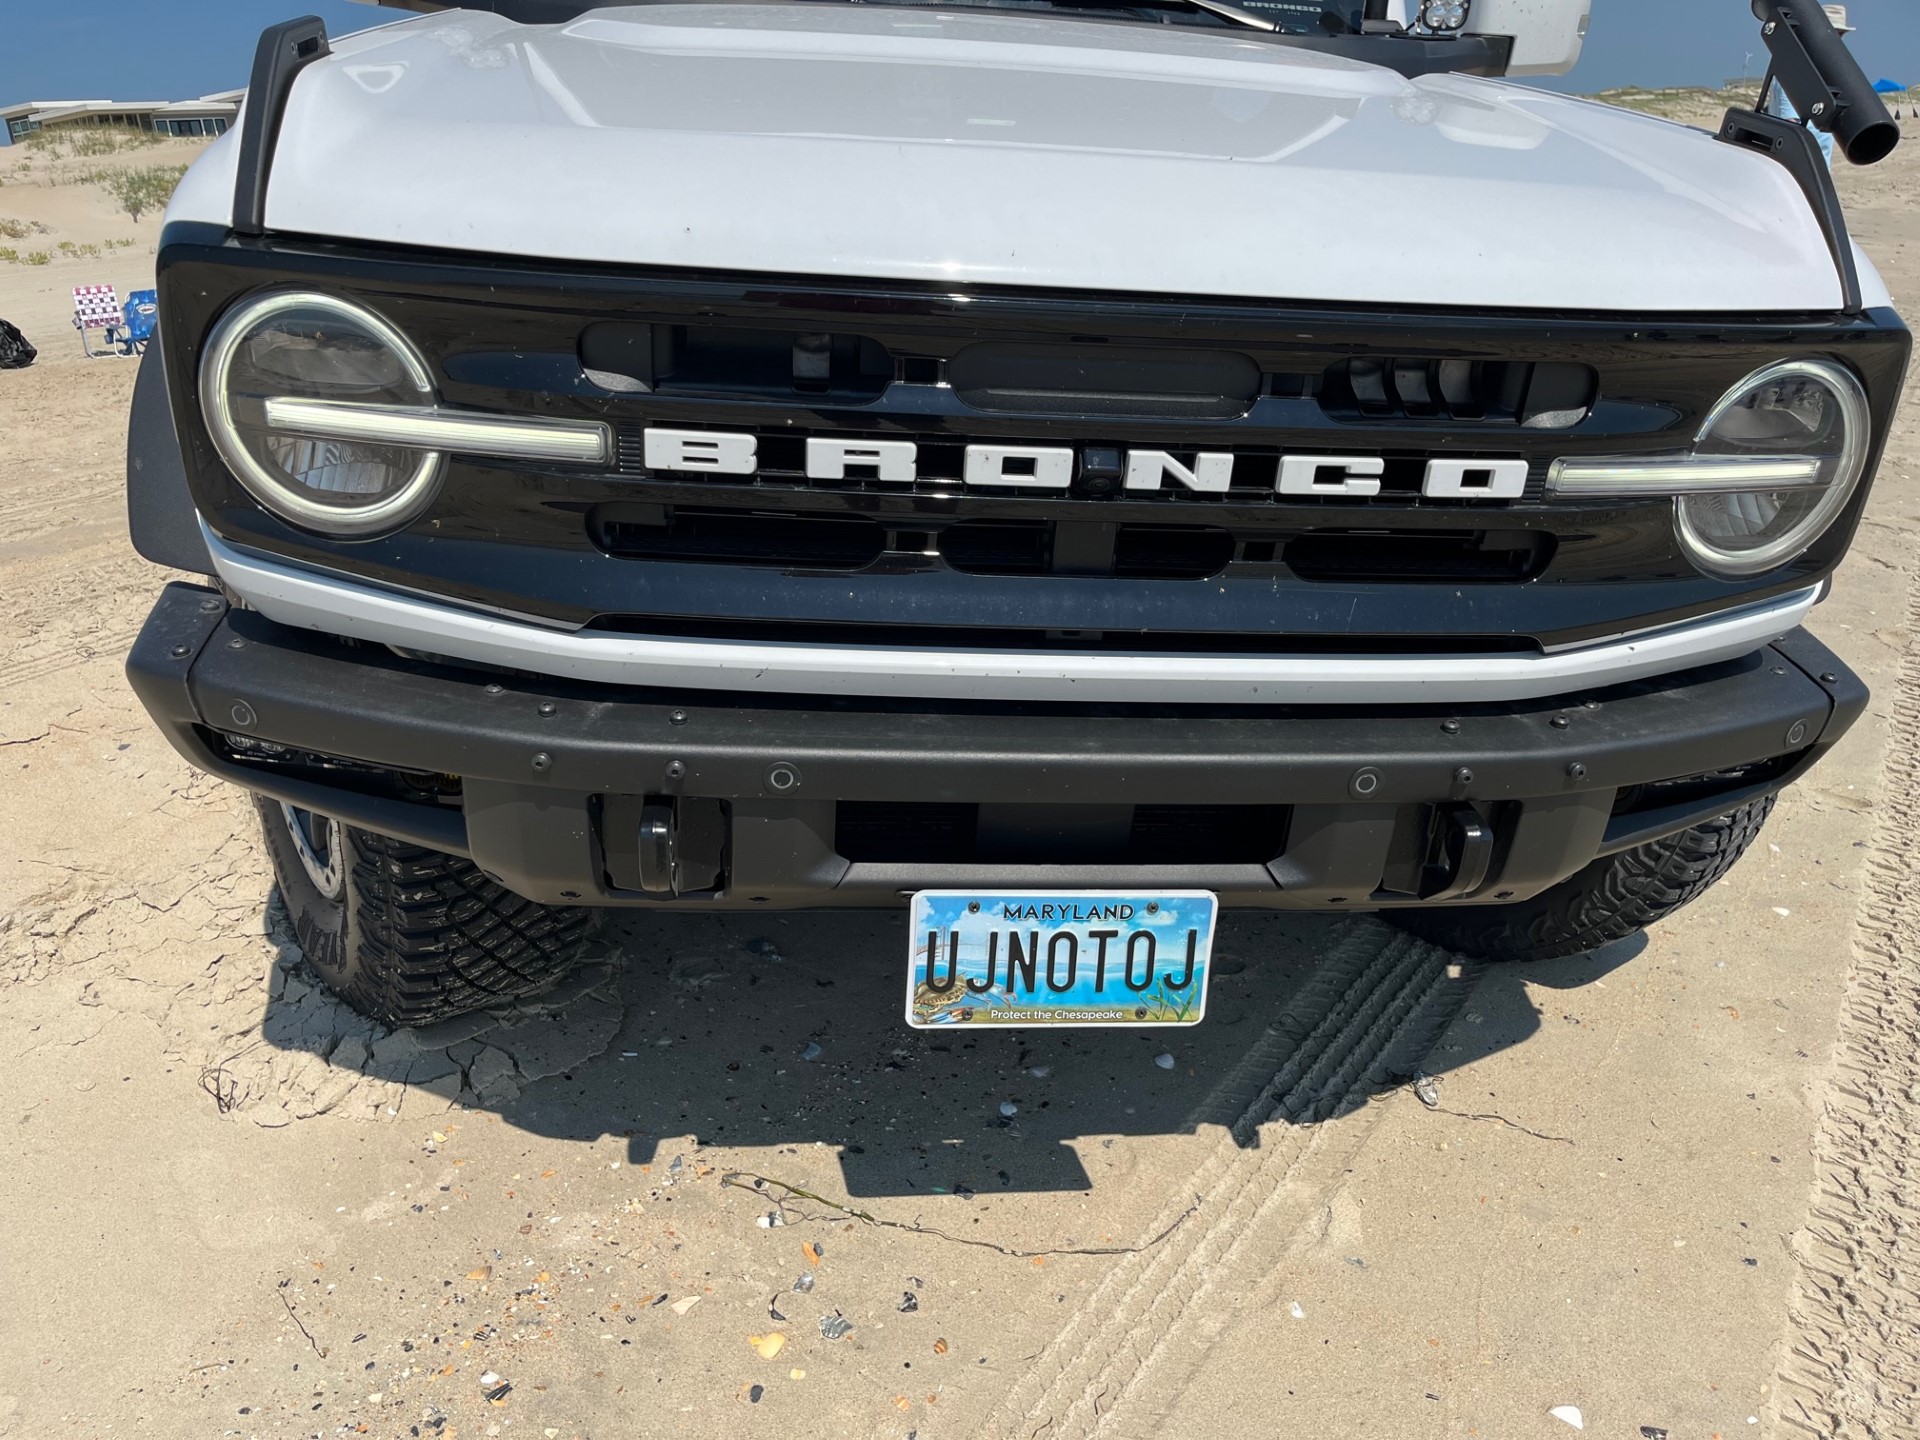 Ford Bronco Custom vanity license plate for your Bronco? license